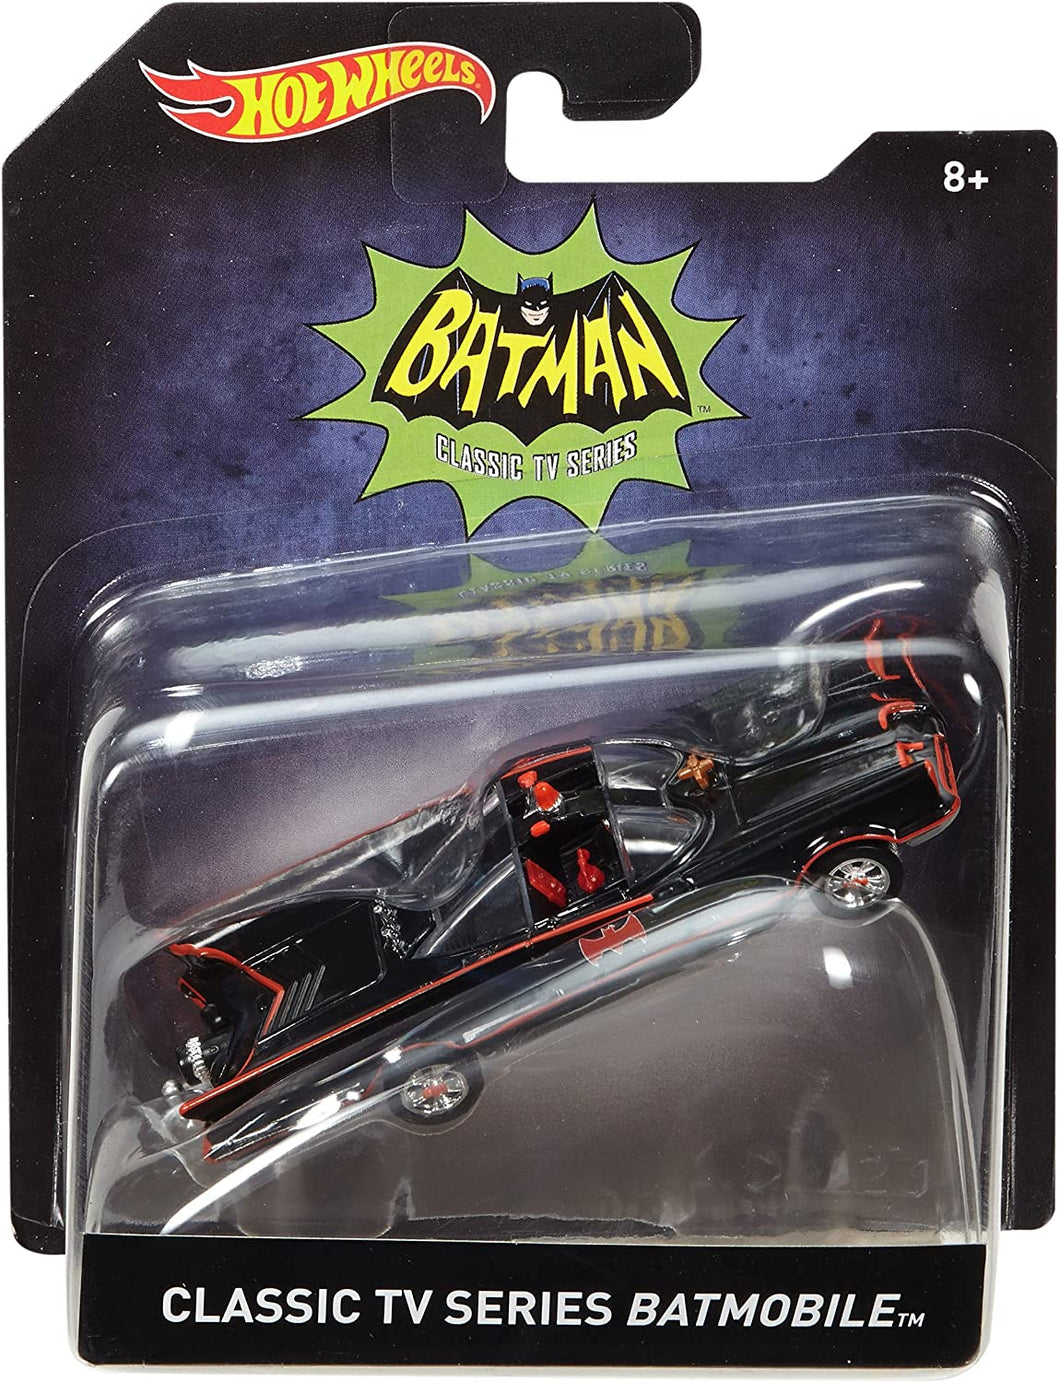 Hot Wheels 1966 Batmobile Batman Classic TV Series